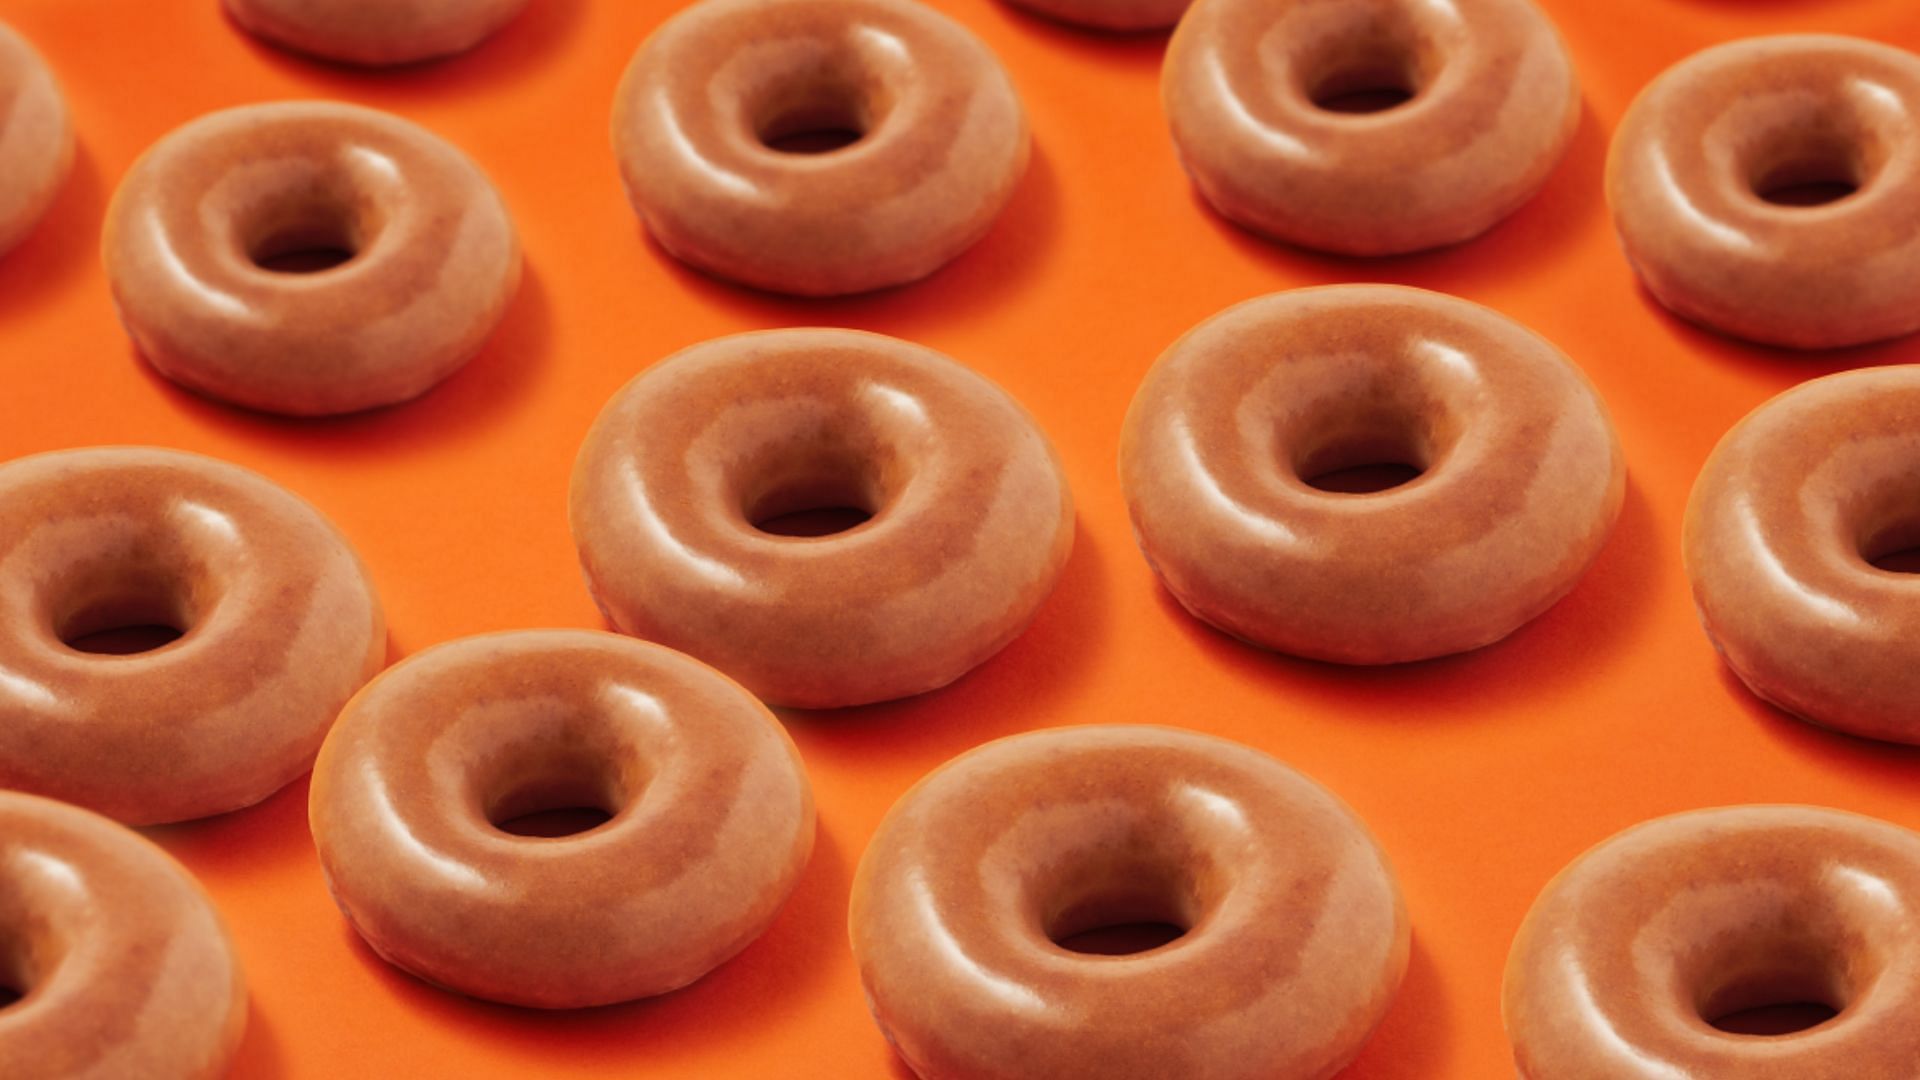 Is Krispy Kreme bringing back Pumpkin Spice donuts? Dates and other